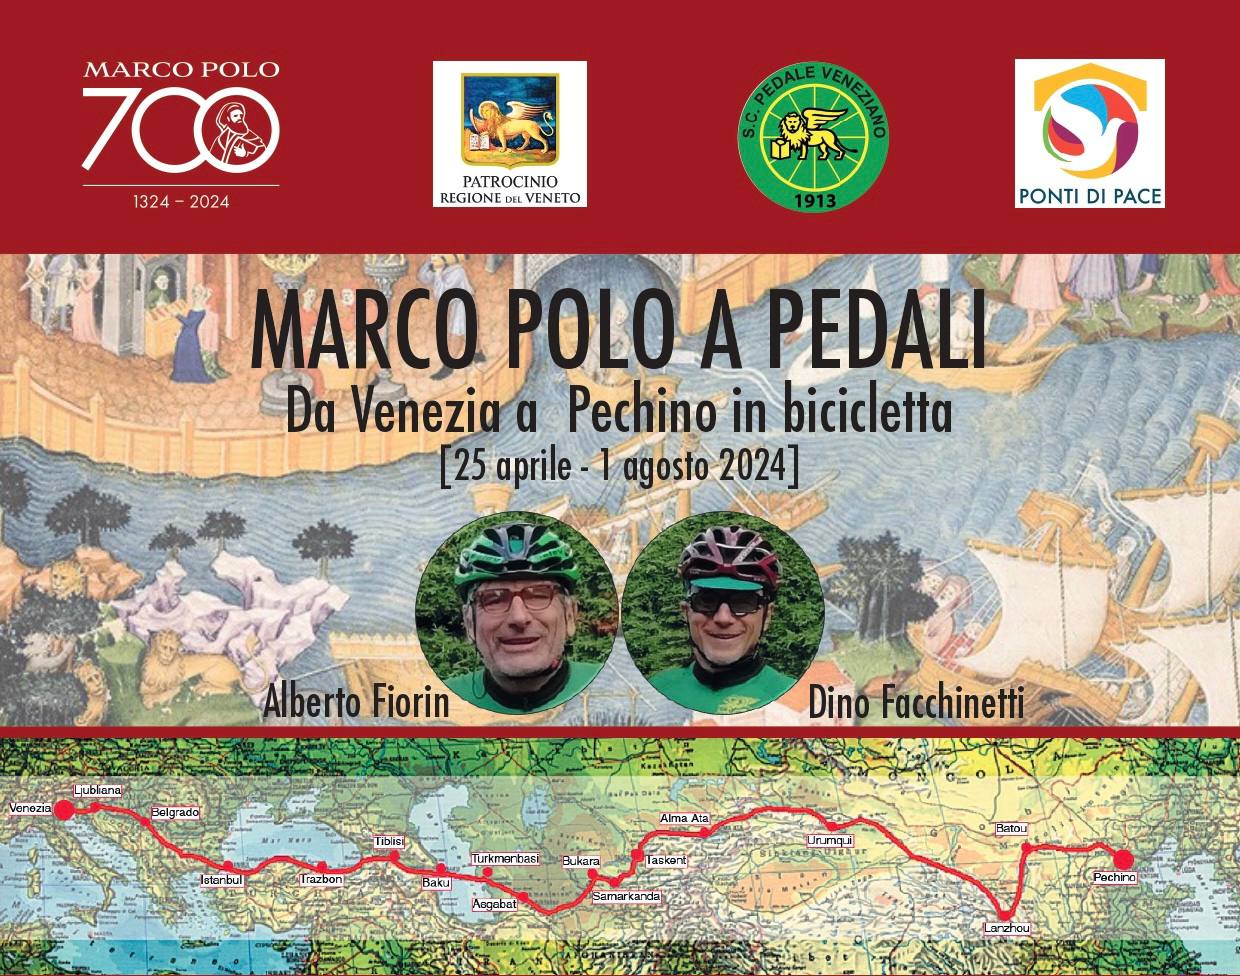 Marco Polo a pedali